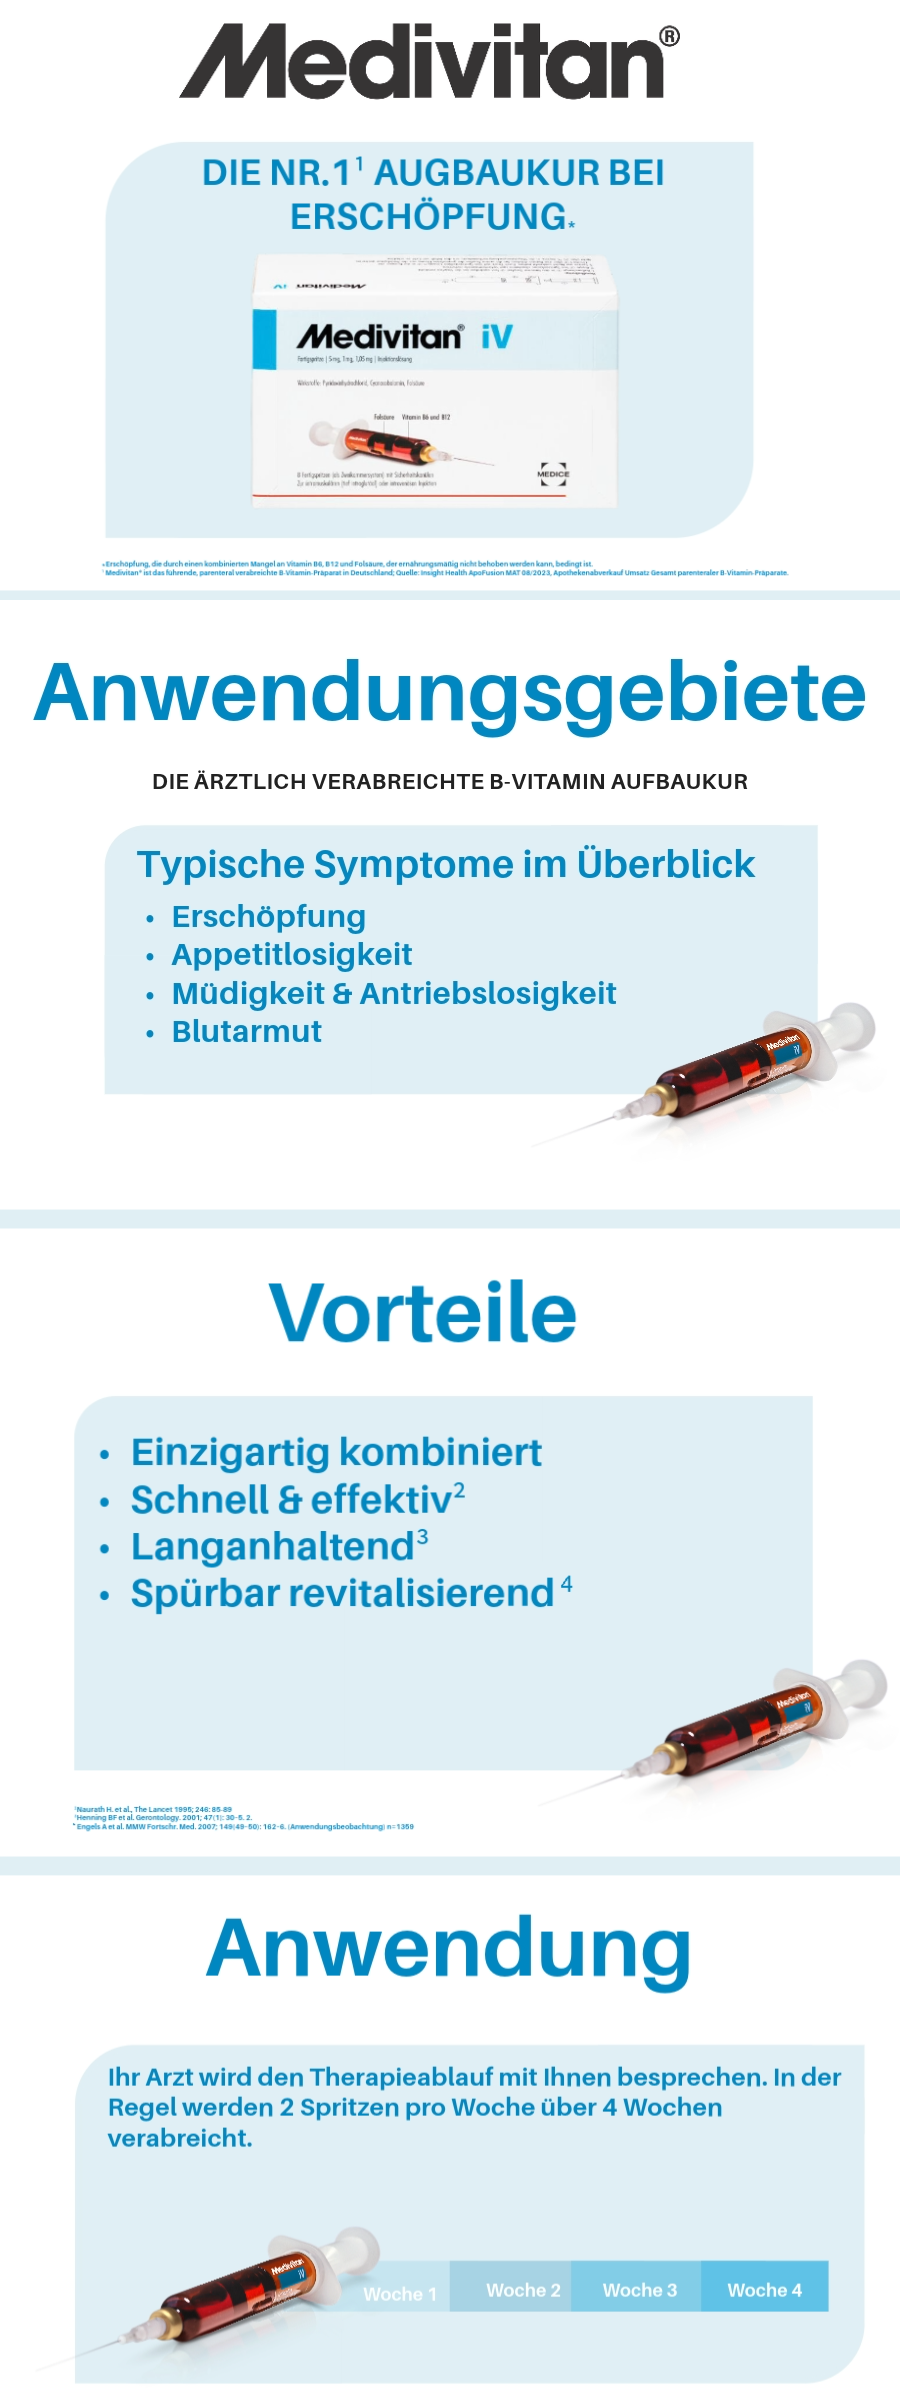 Medivitan iV Fertigspritzen bei Vitamin B-Mangel (8 Stk) -  medikamente-per-klick.de